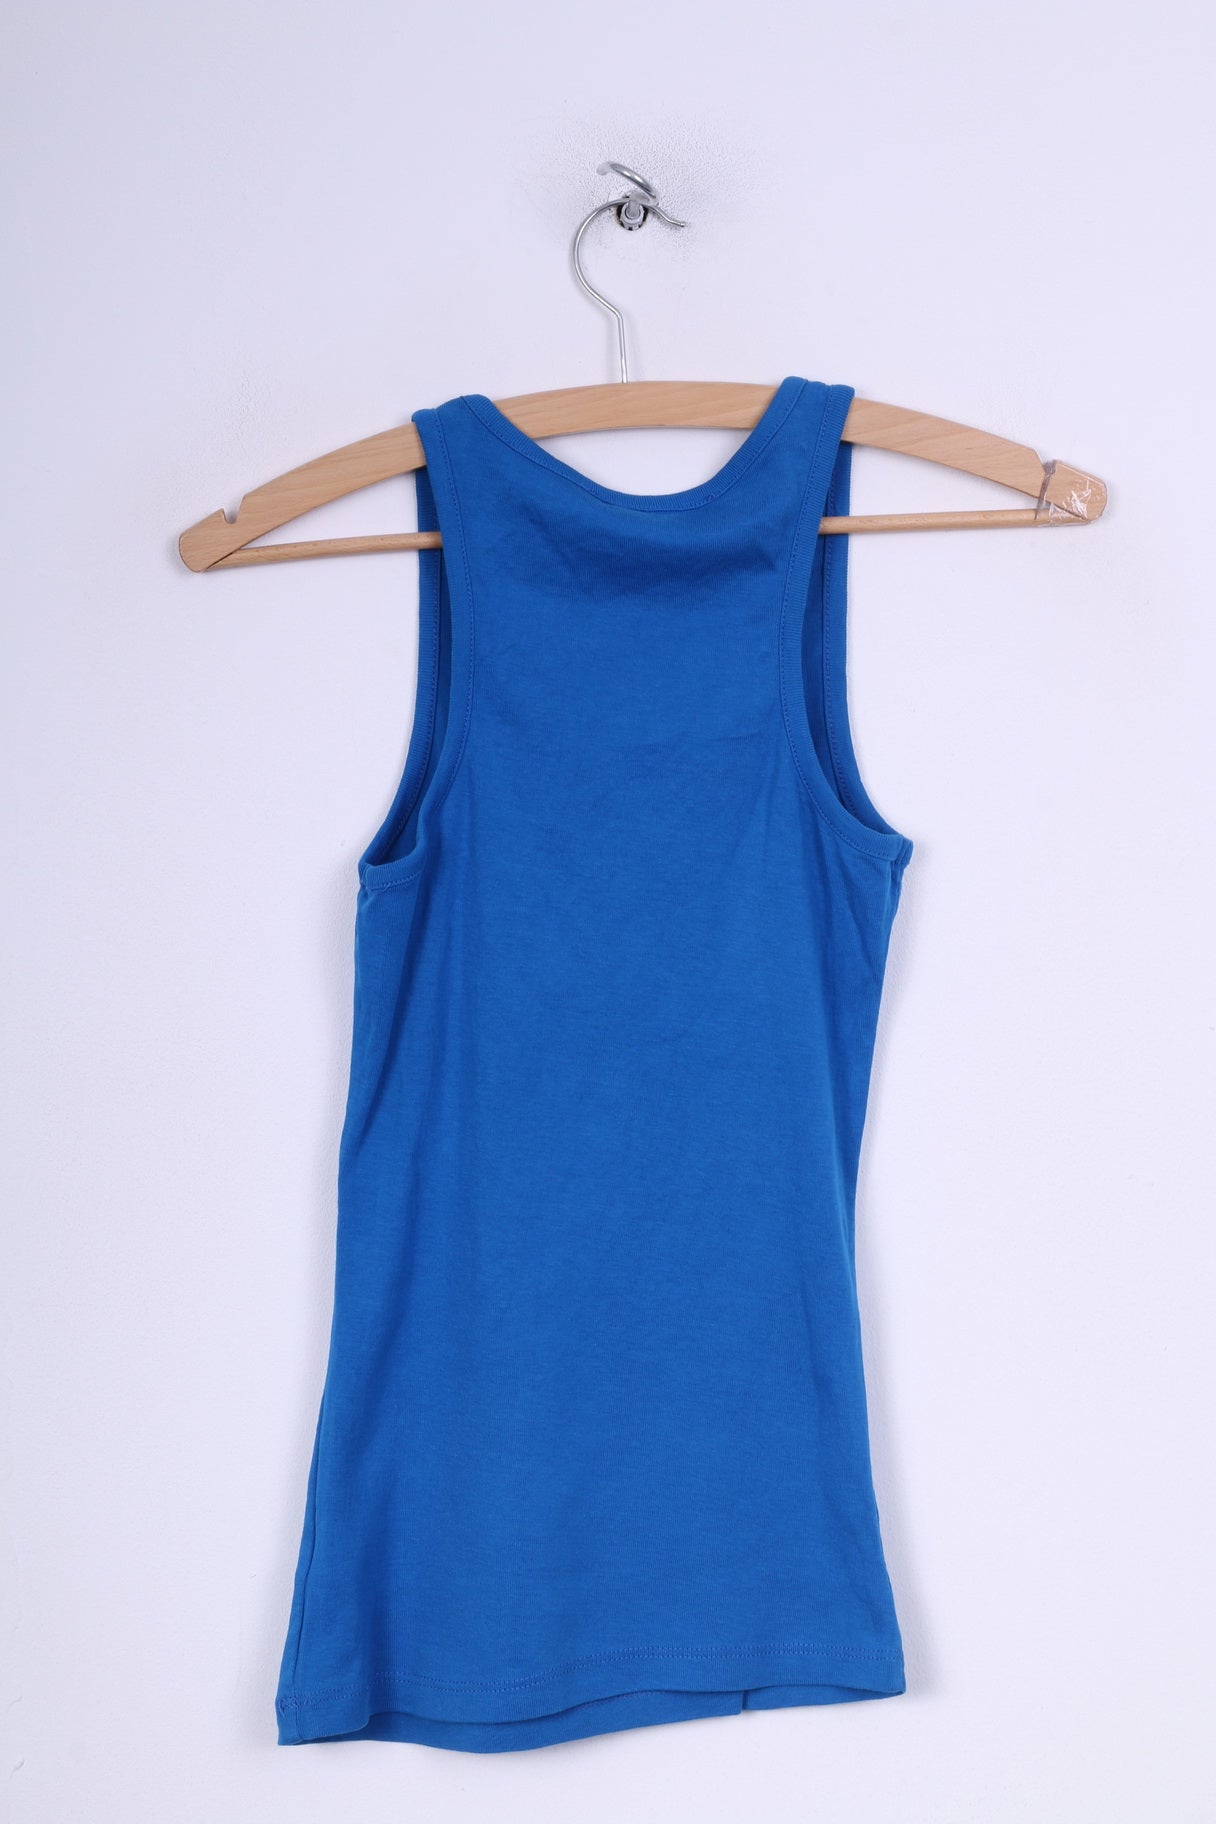 Philipp Plein Womens M Tank Top Shirt Blue Graphic Skull Summer Sleeveless Cotton